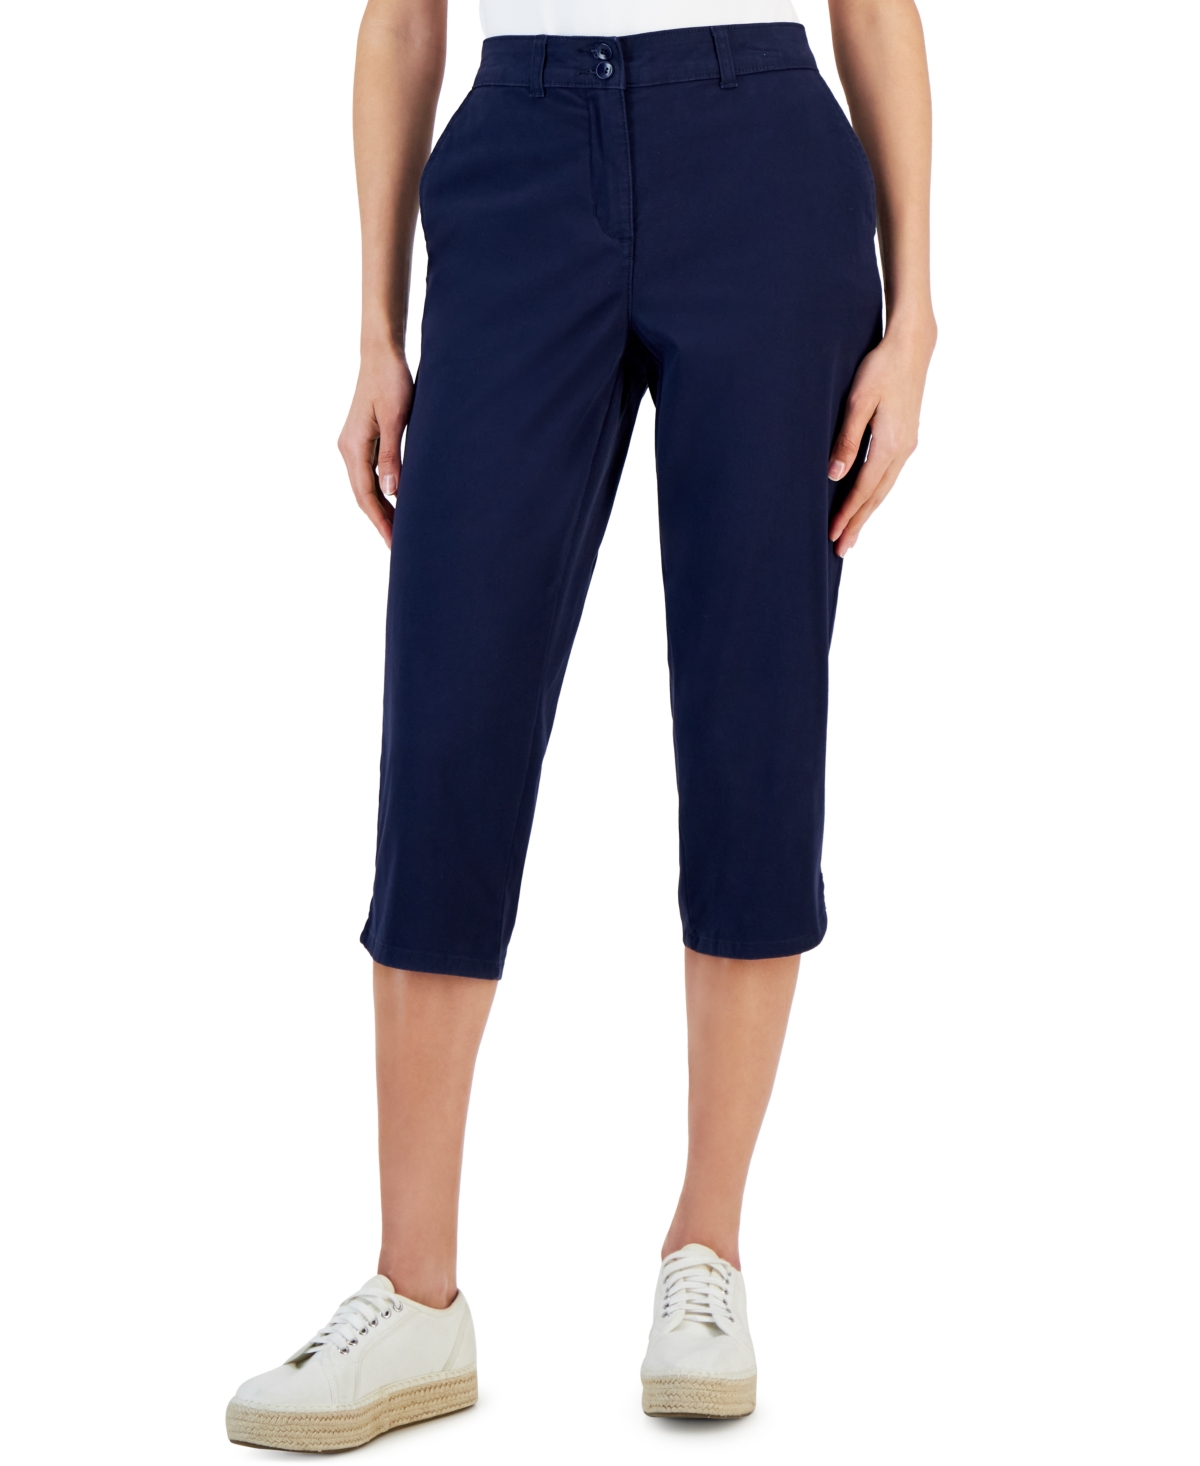 Petite Comfort Waist High-Rise Capri Pants, Created for Macy's - Intrepid Blue